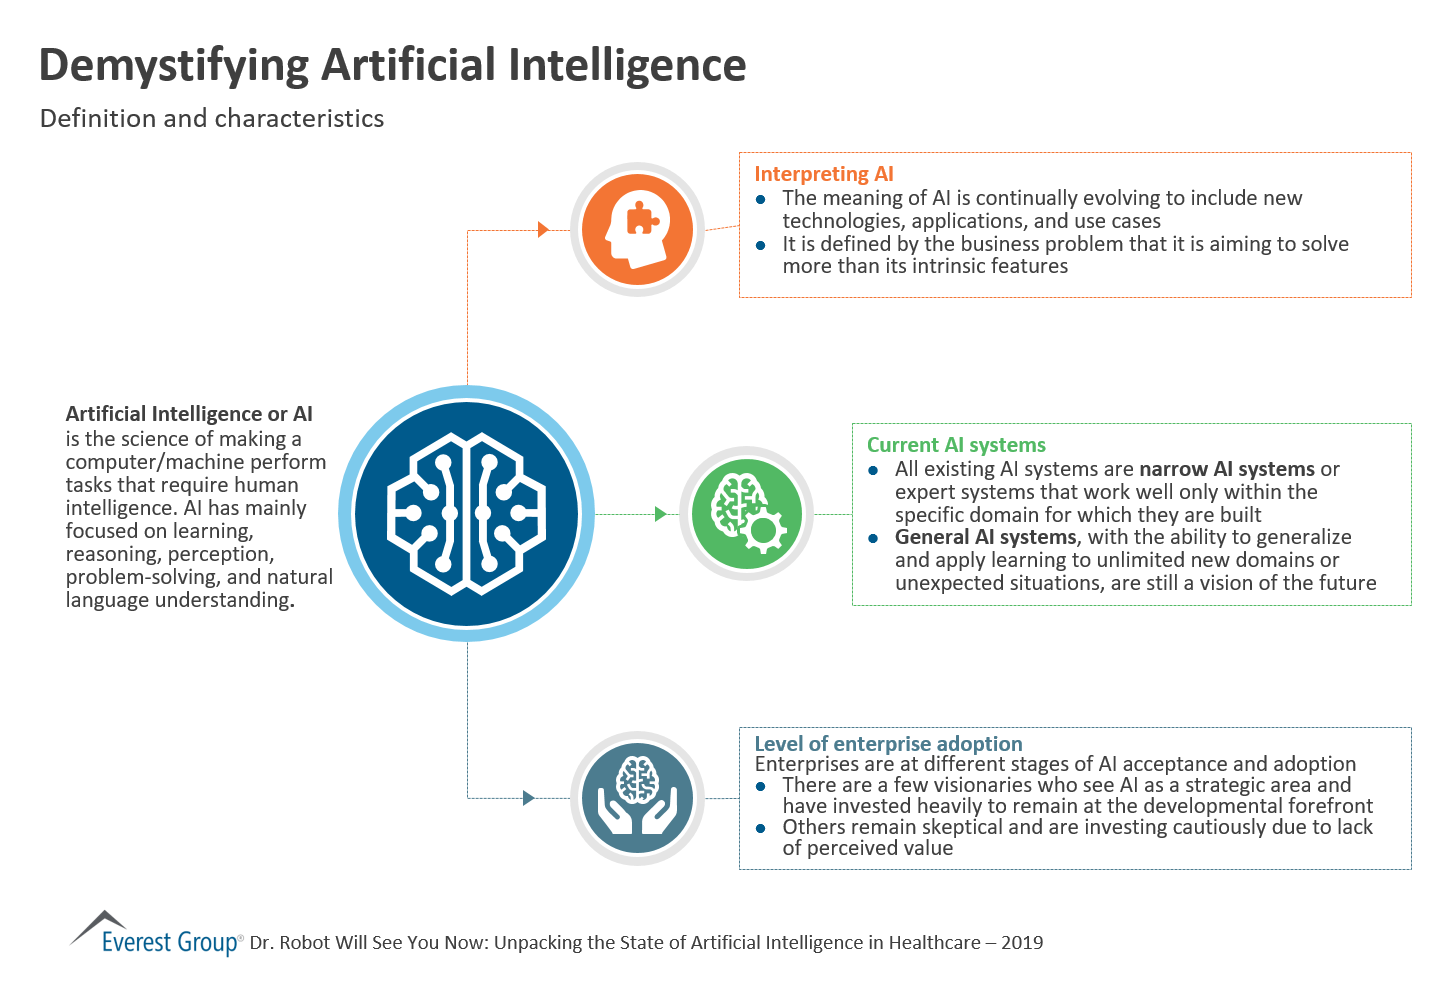 Demystifying Artificial Intelligence